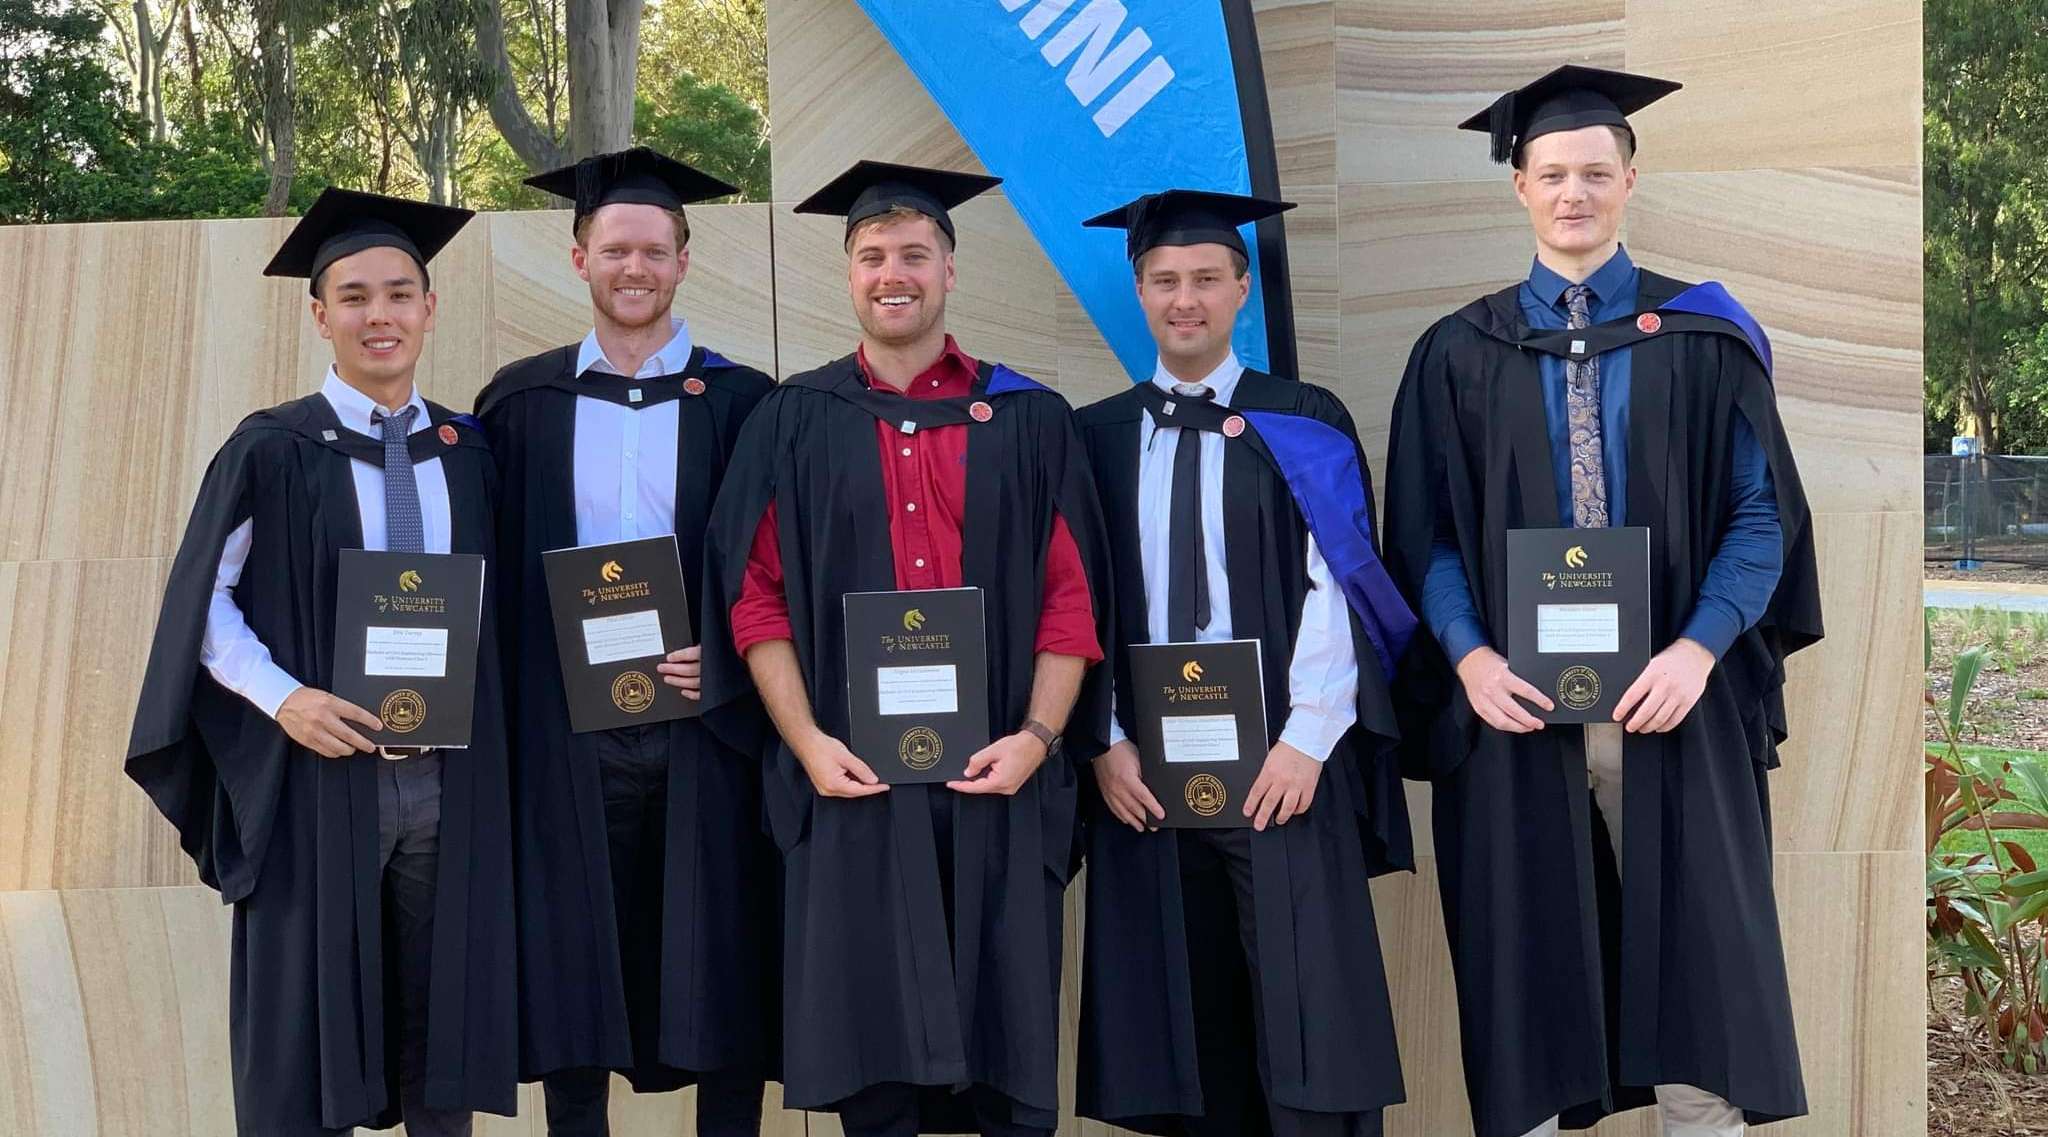 Congratulations to ADWJ's Newest Engineering Graduates